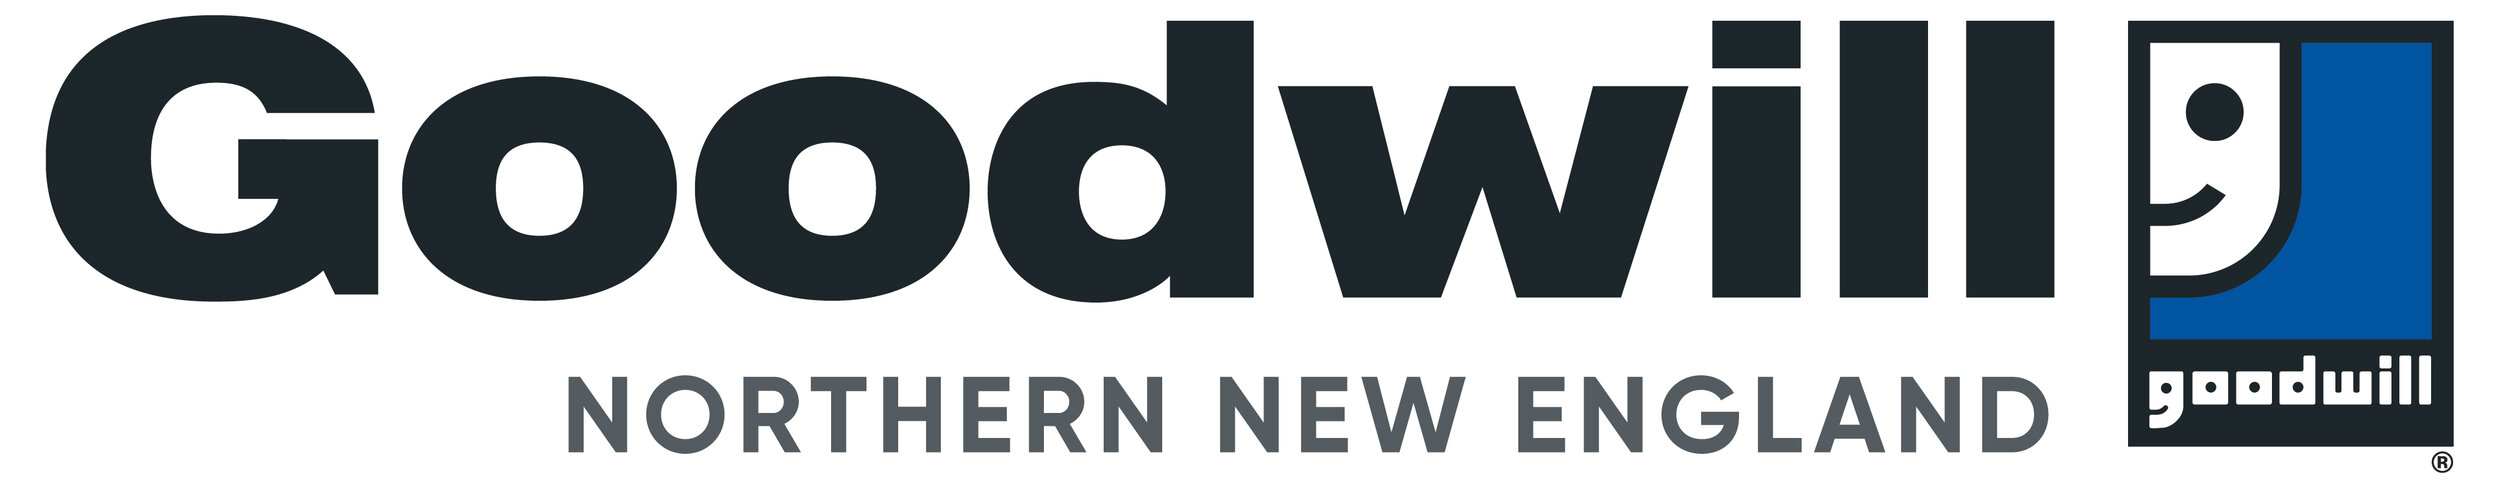 Goodwill NNE Logo 2017.jpg